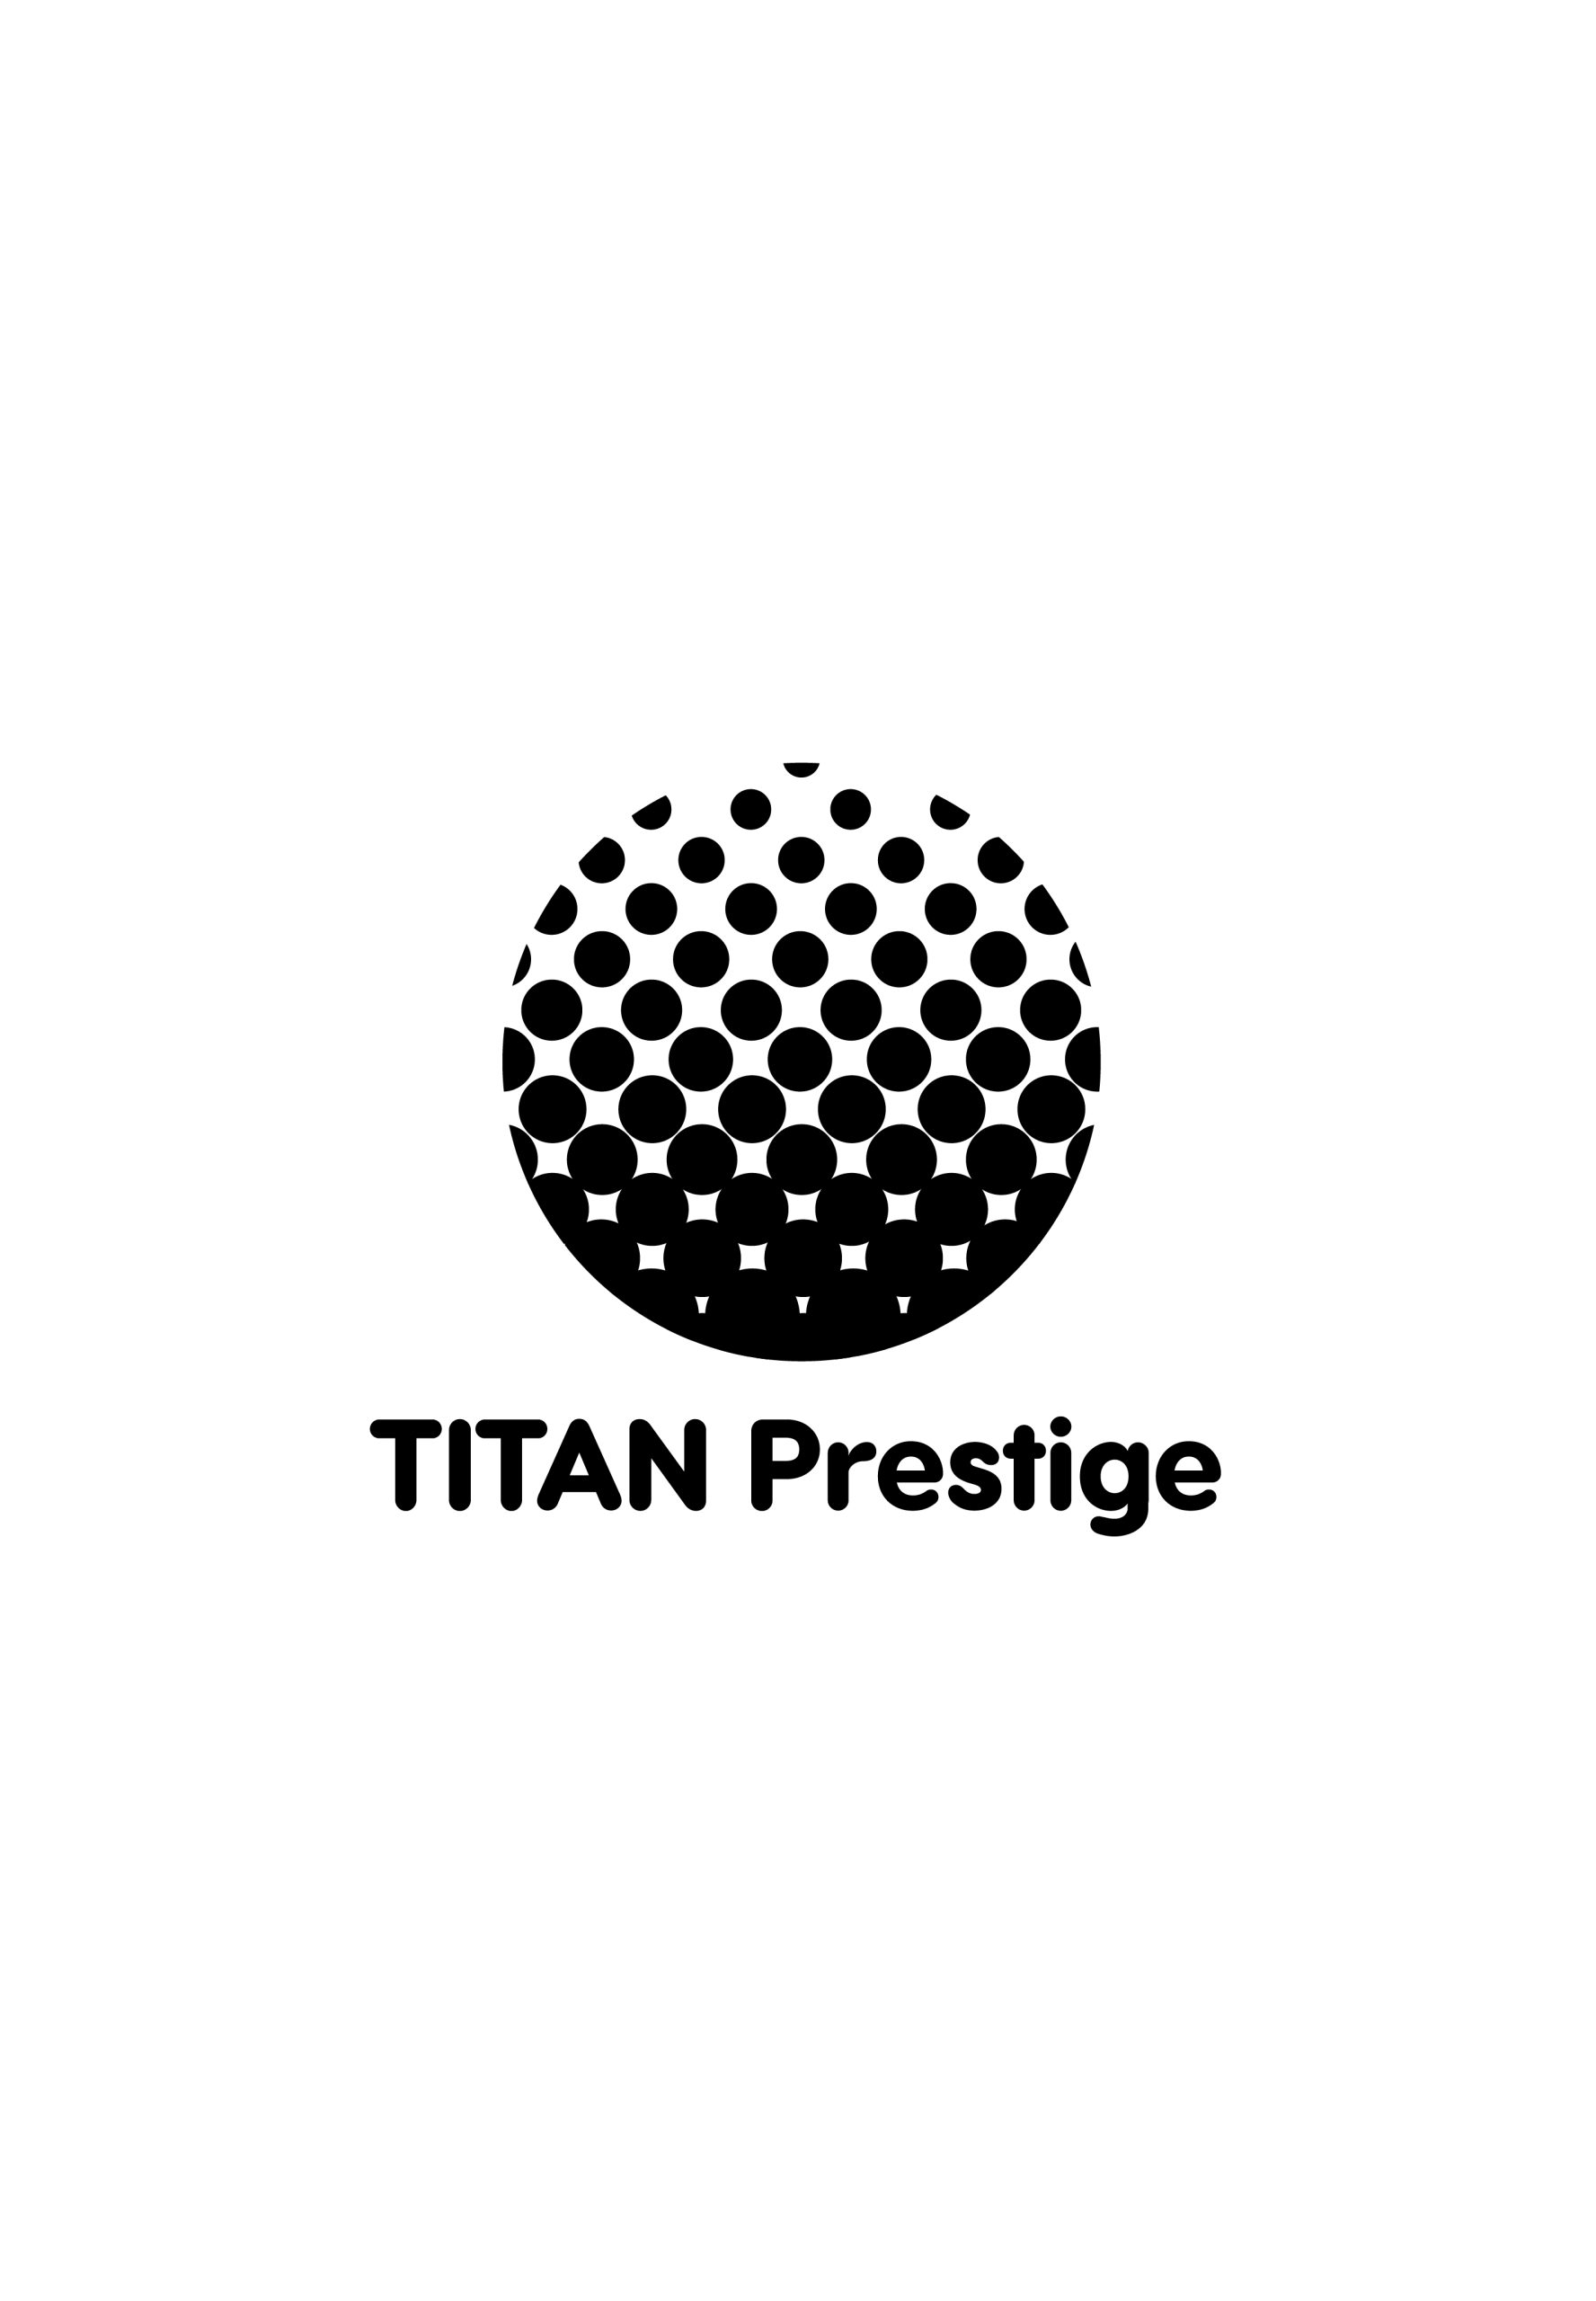 TITAN Prestige